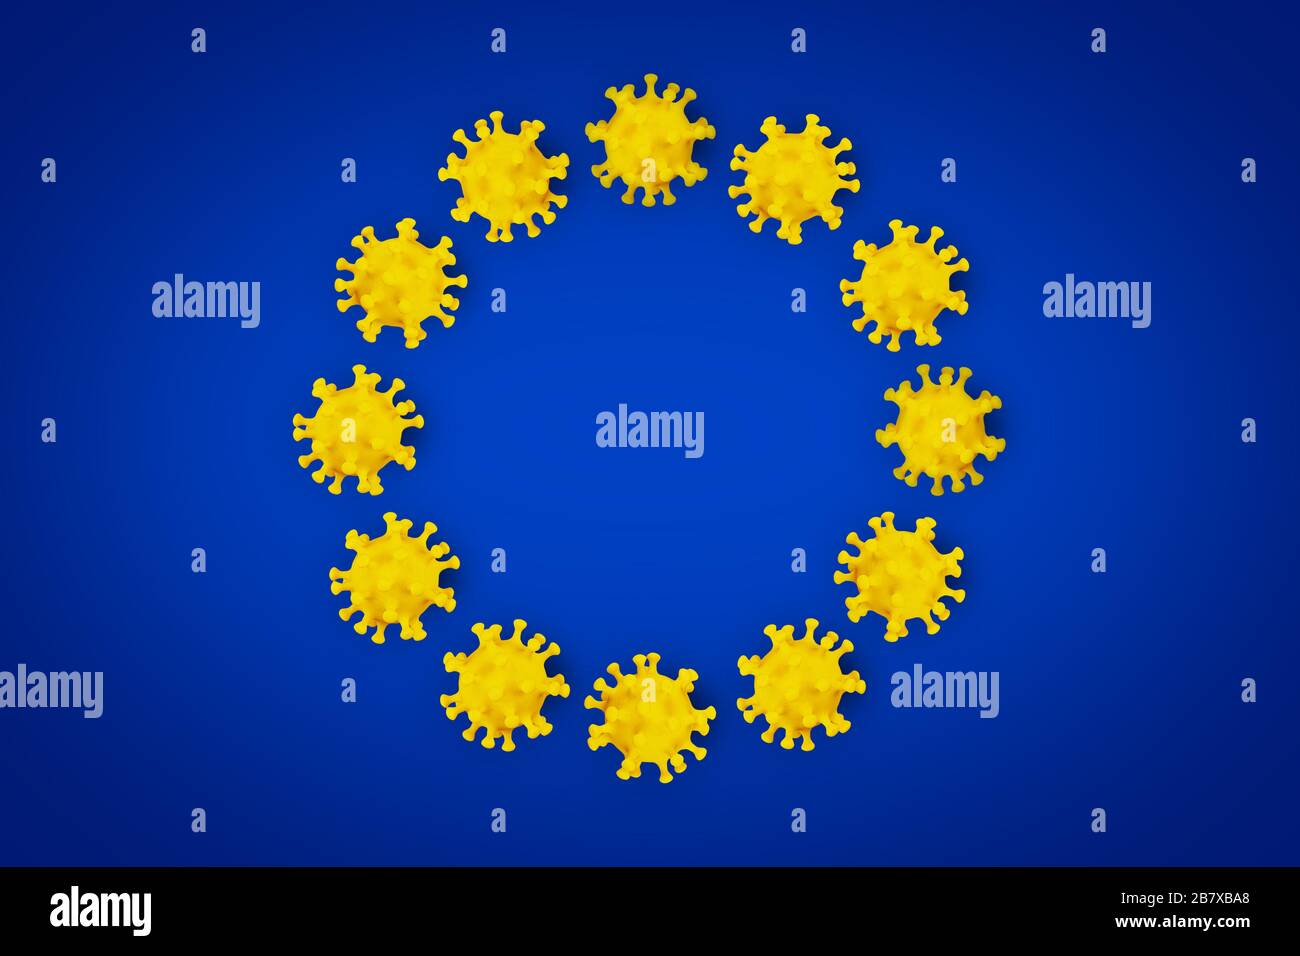 Corona Virus symbol on blue yellow european union EU flag europe background. Cornavirus COVID-19 global  outbreak pandemic epidemic medical concept. Stock Photo